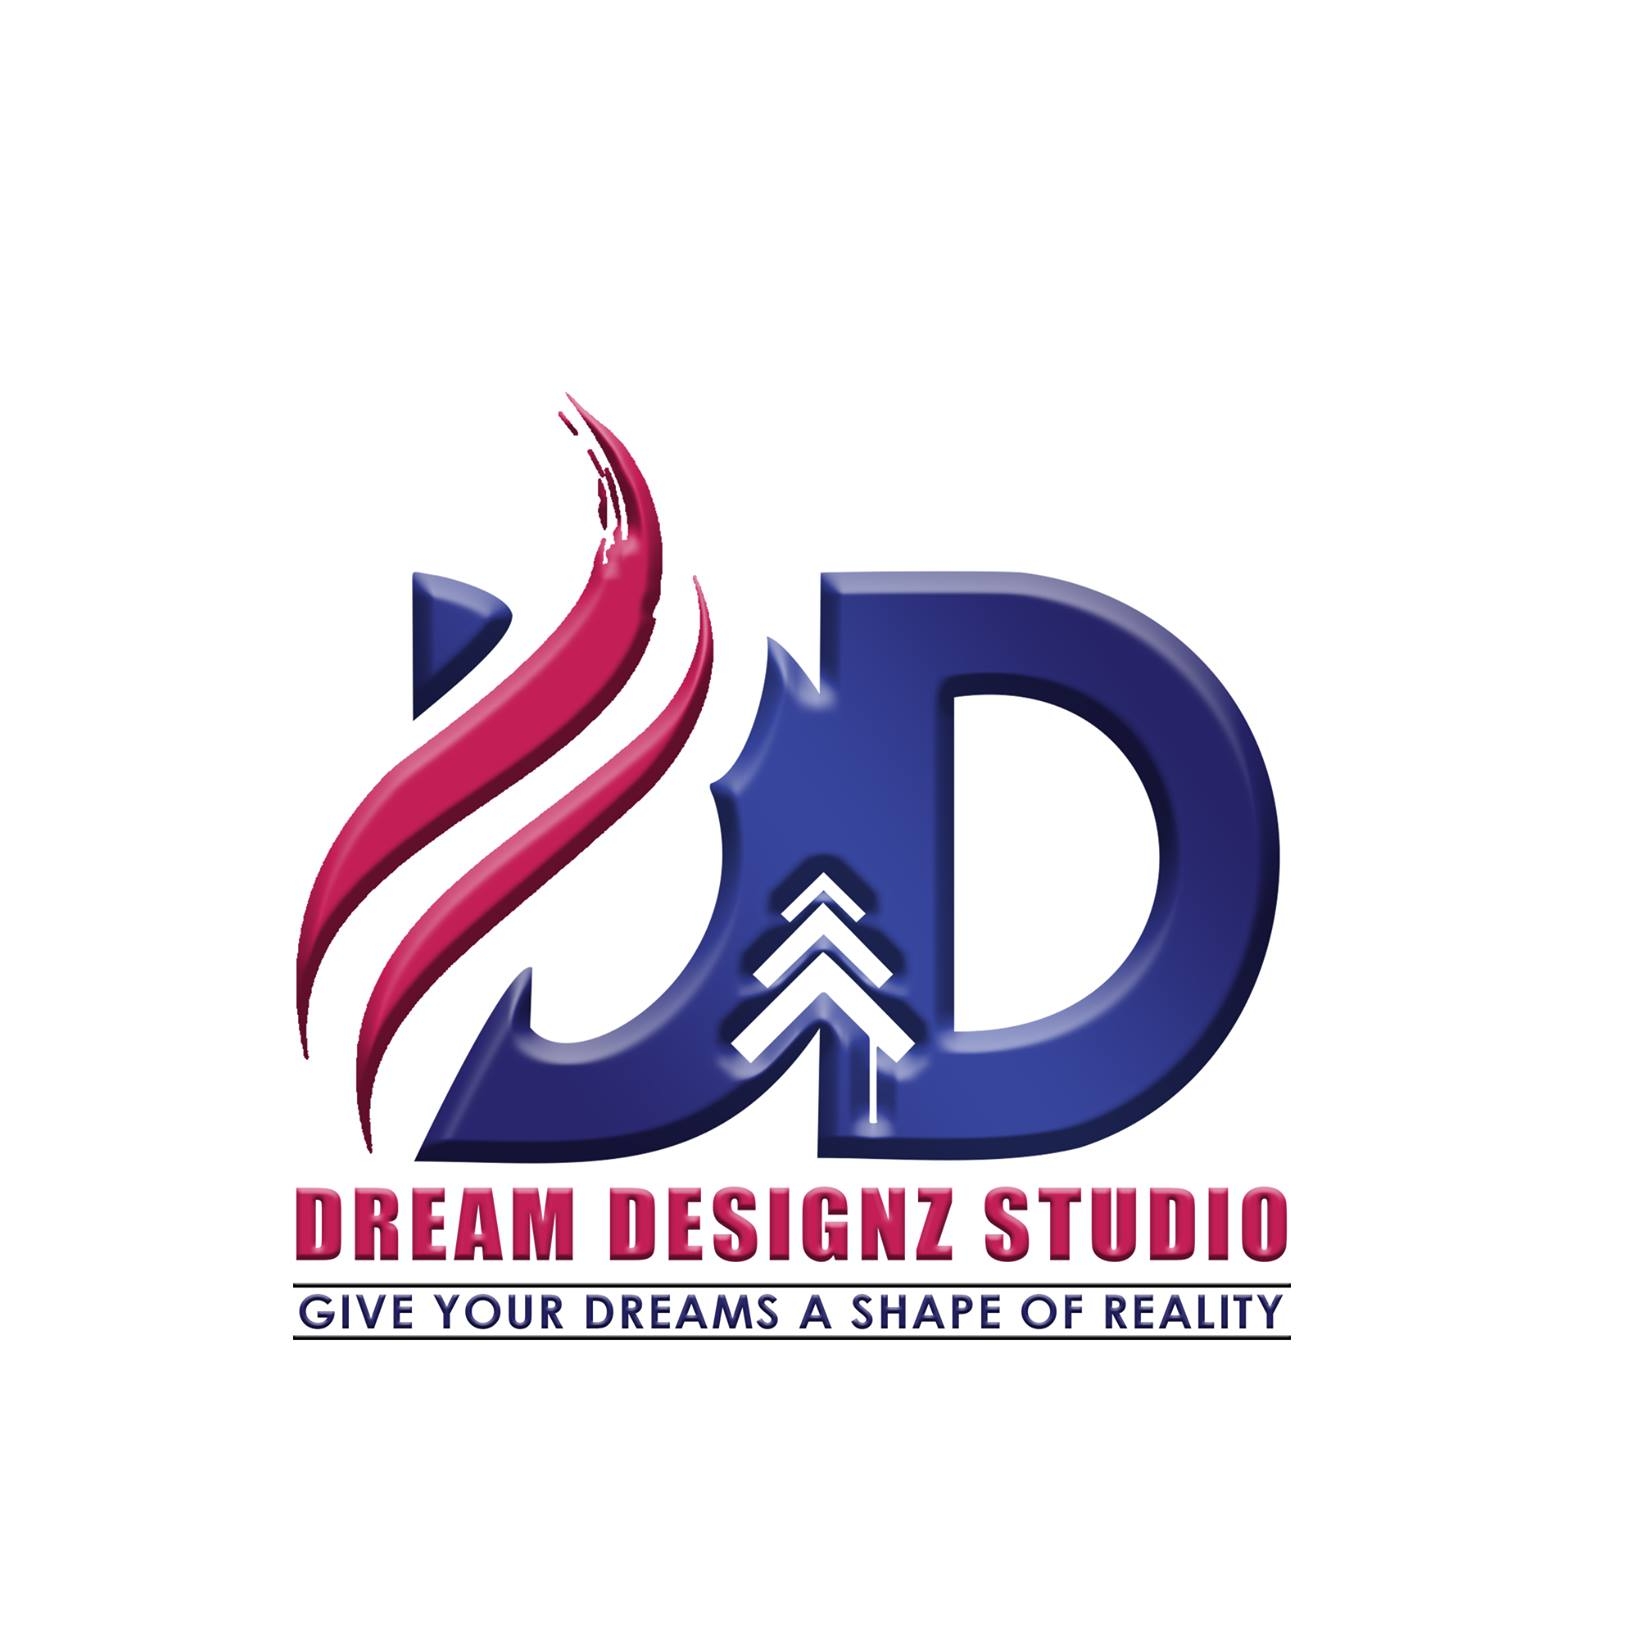 DREAM DESIGNZ STUDIO|IT Services|Professional Services